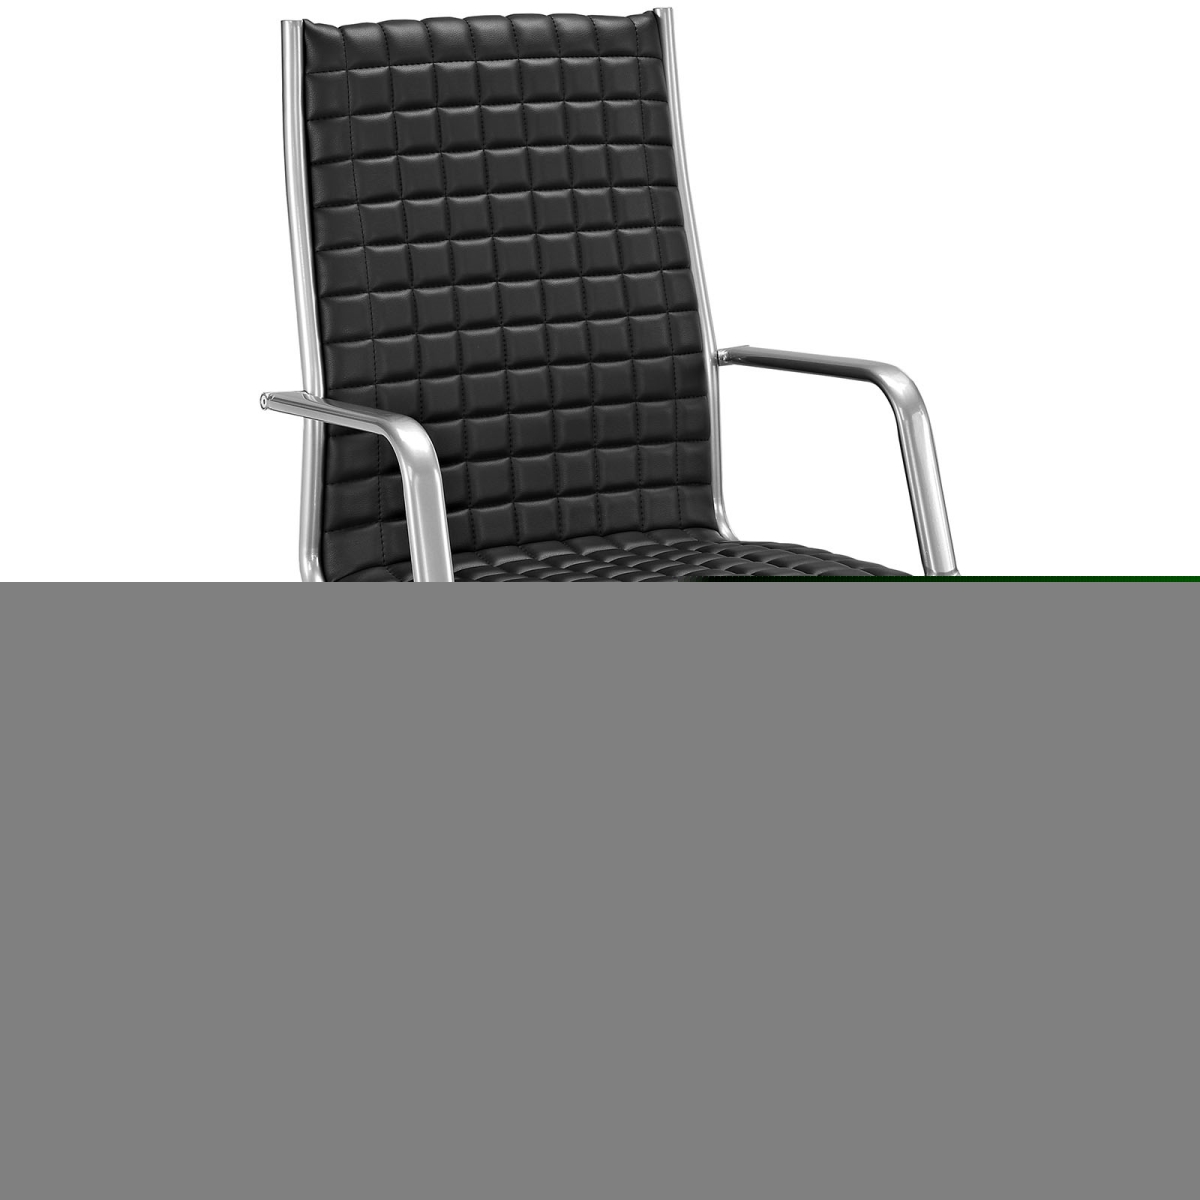 Modway Eei-2122-blk Pattern Highback Office Chair, Black